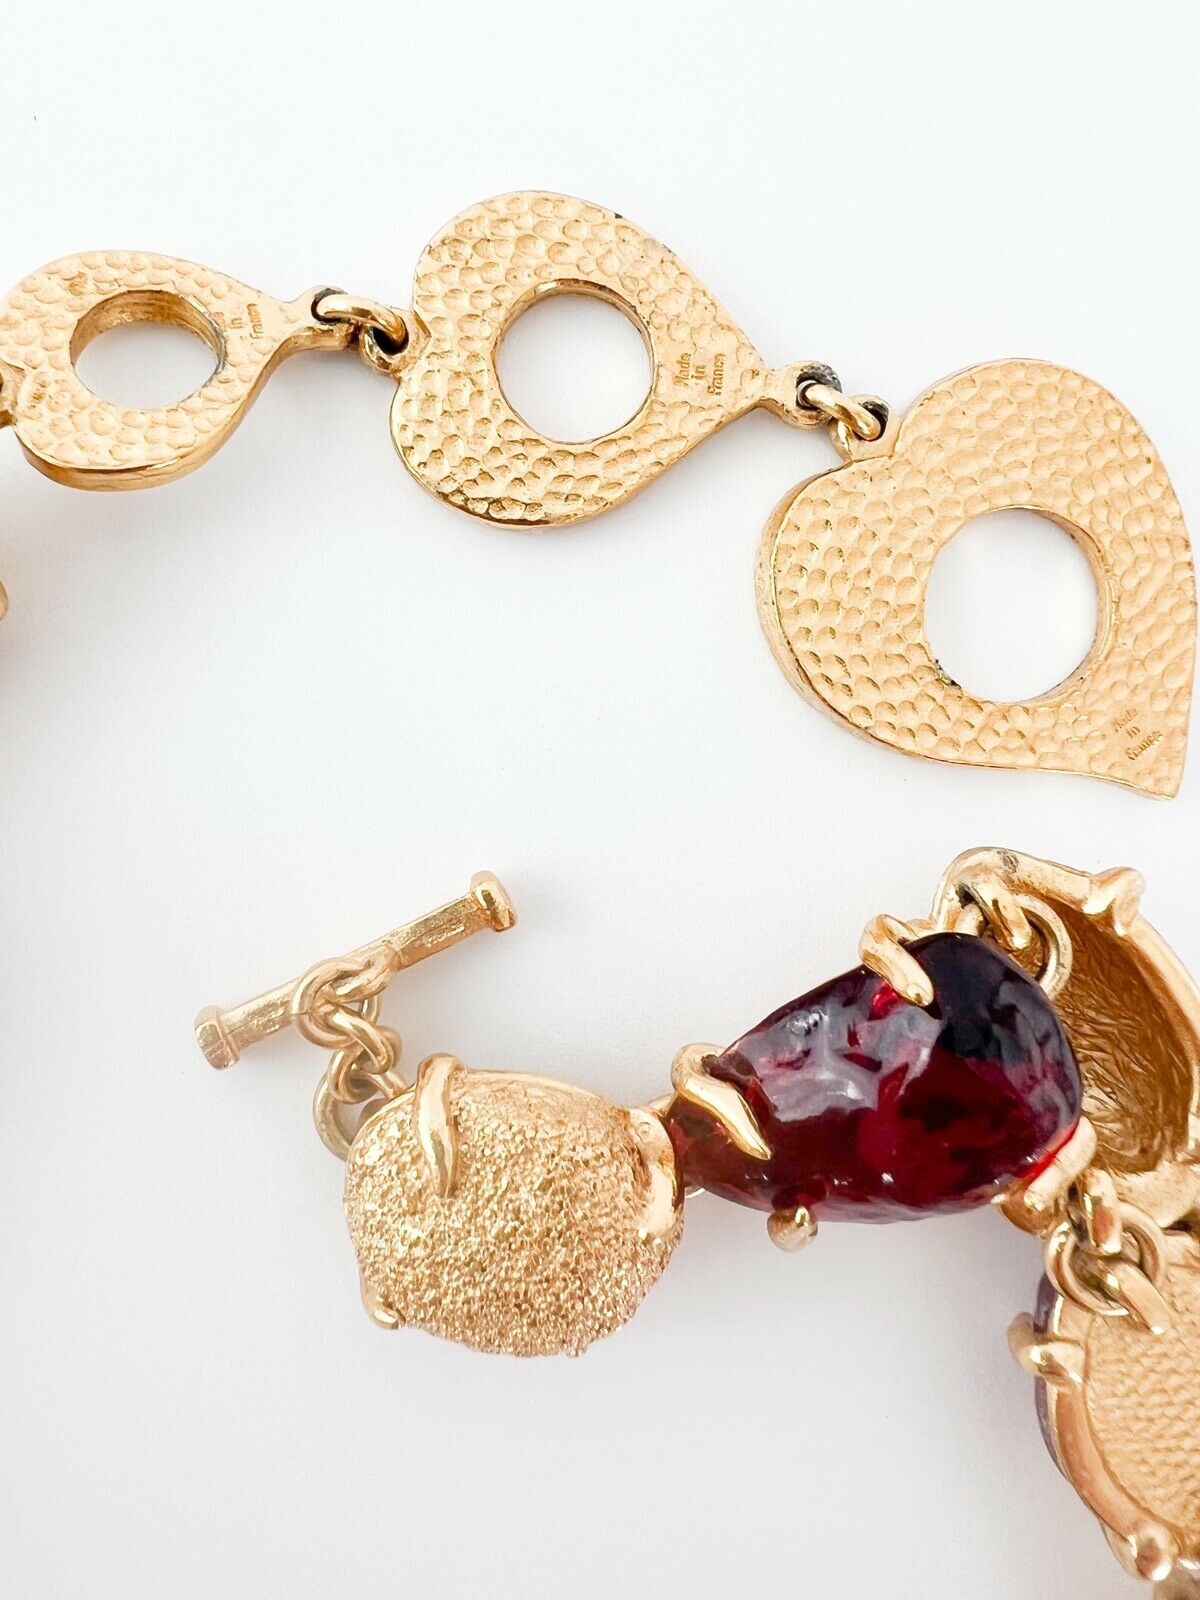 YSL Yves Saint Laurent Vintage Necklace Gold Made in France